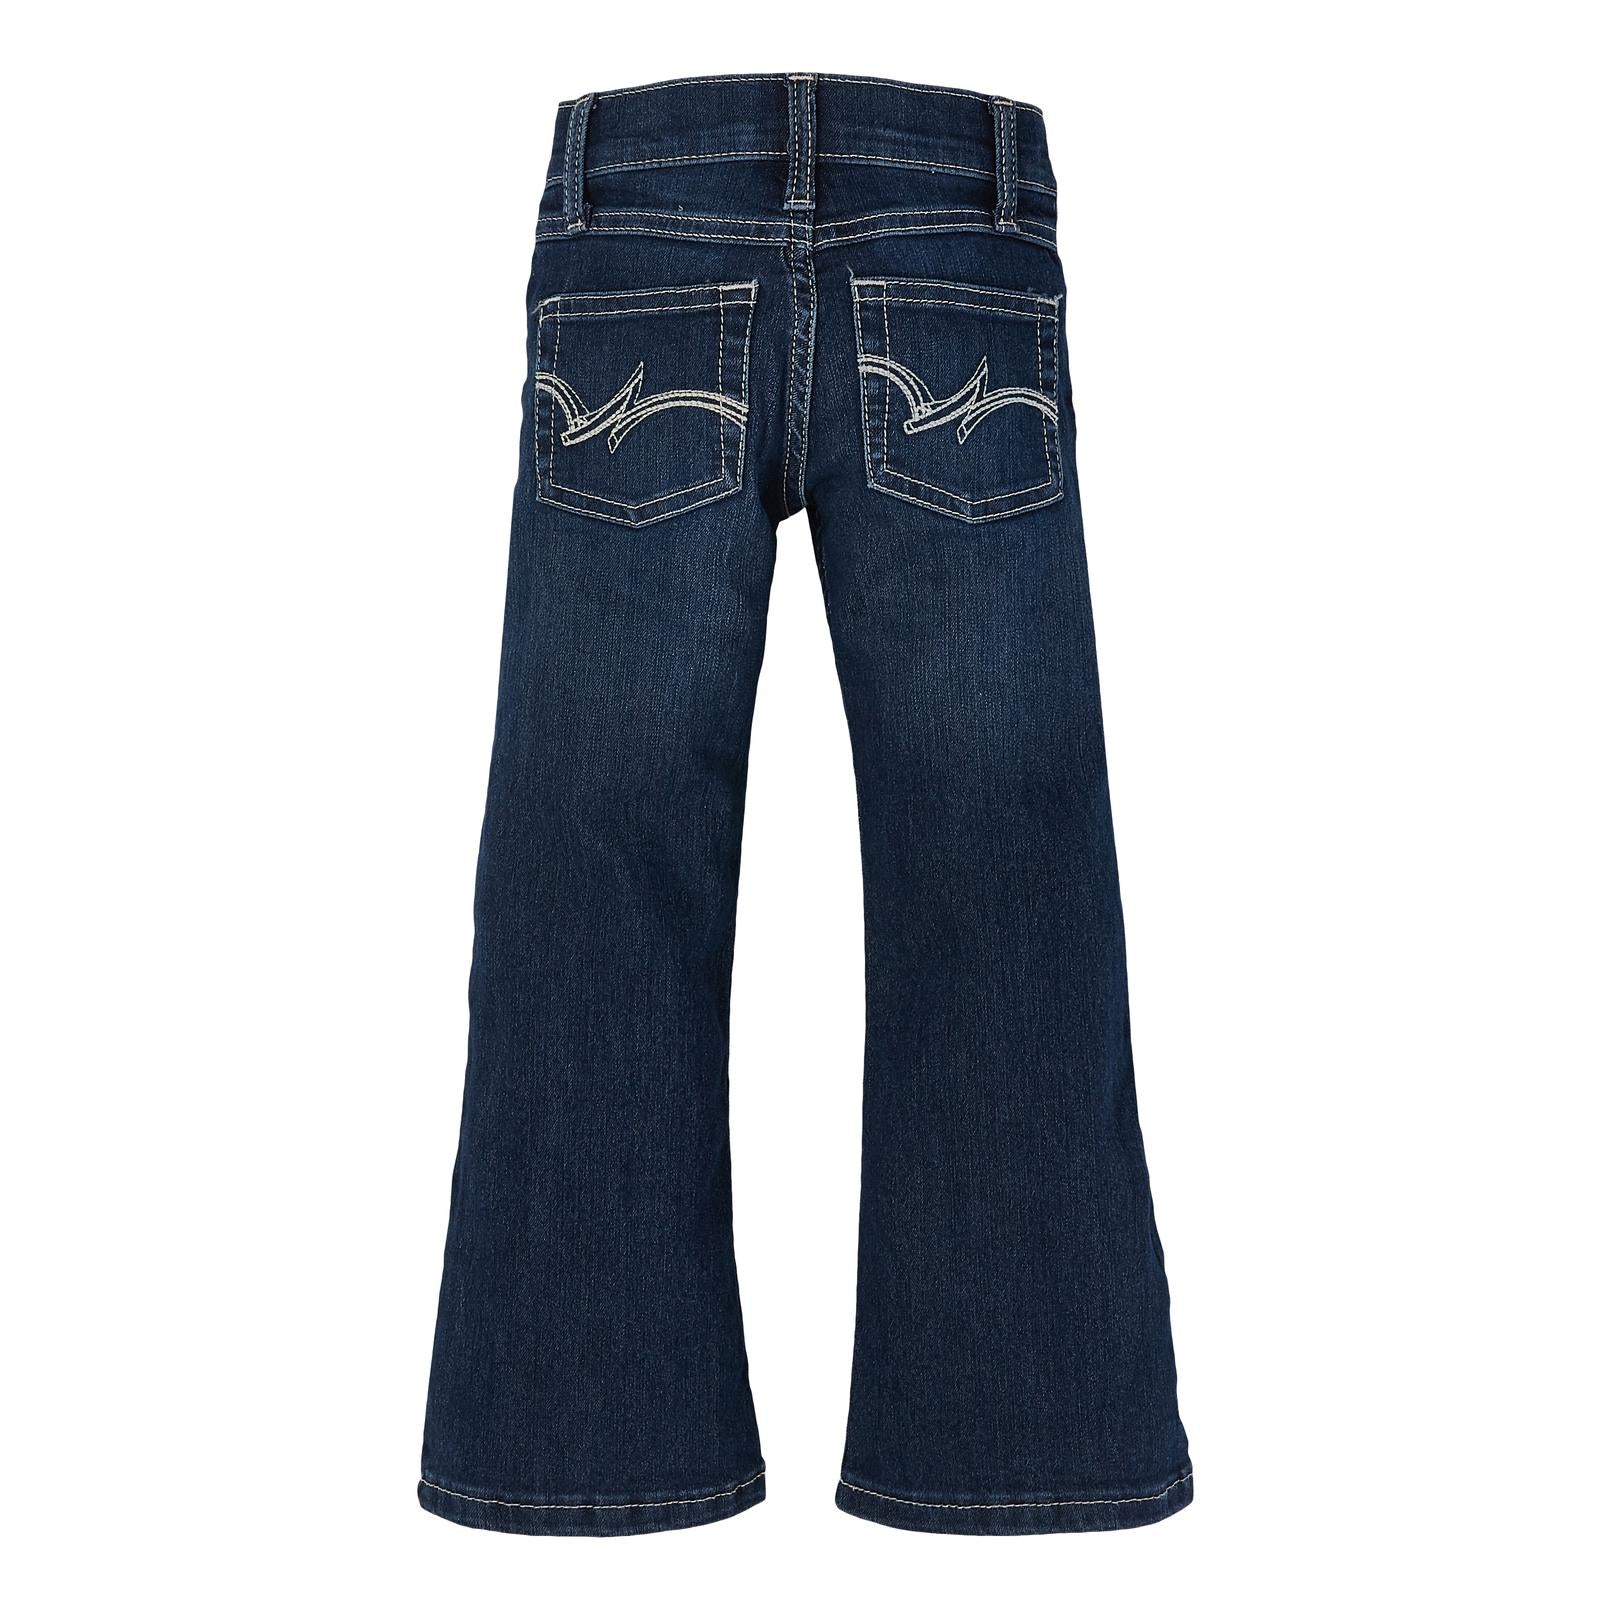 Wrangler Men's Premium Performance Advanced Comfort Cowboy Cut Jean 